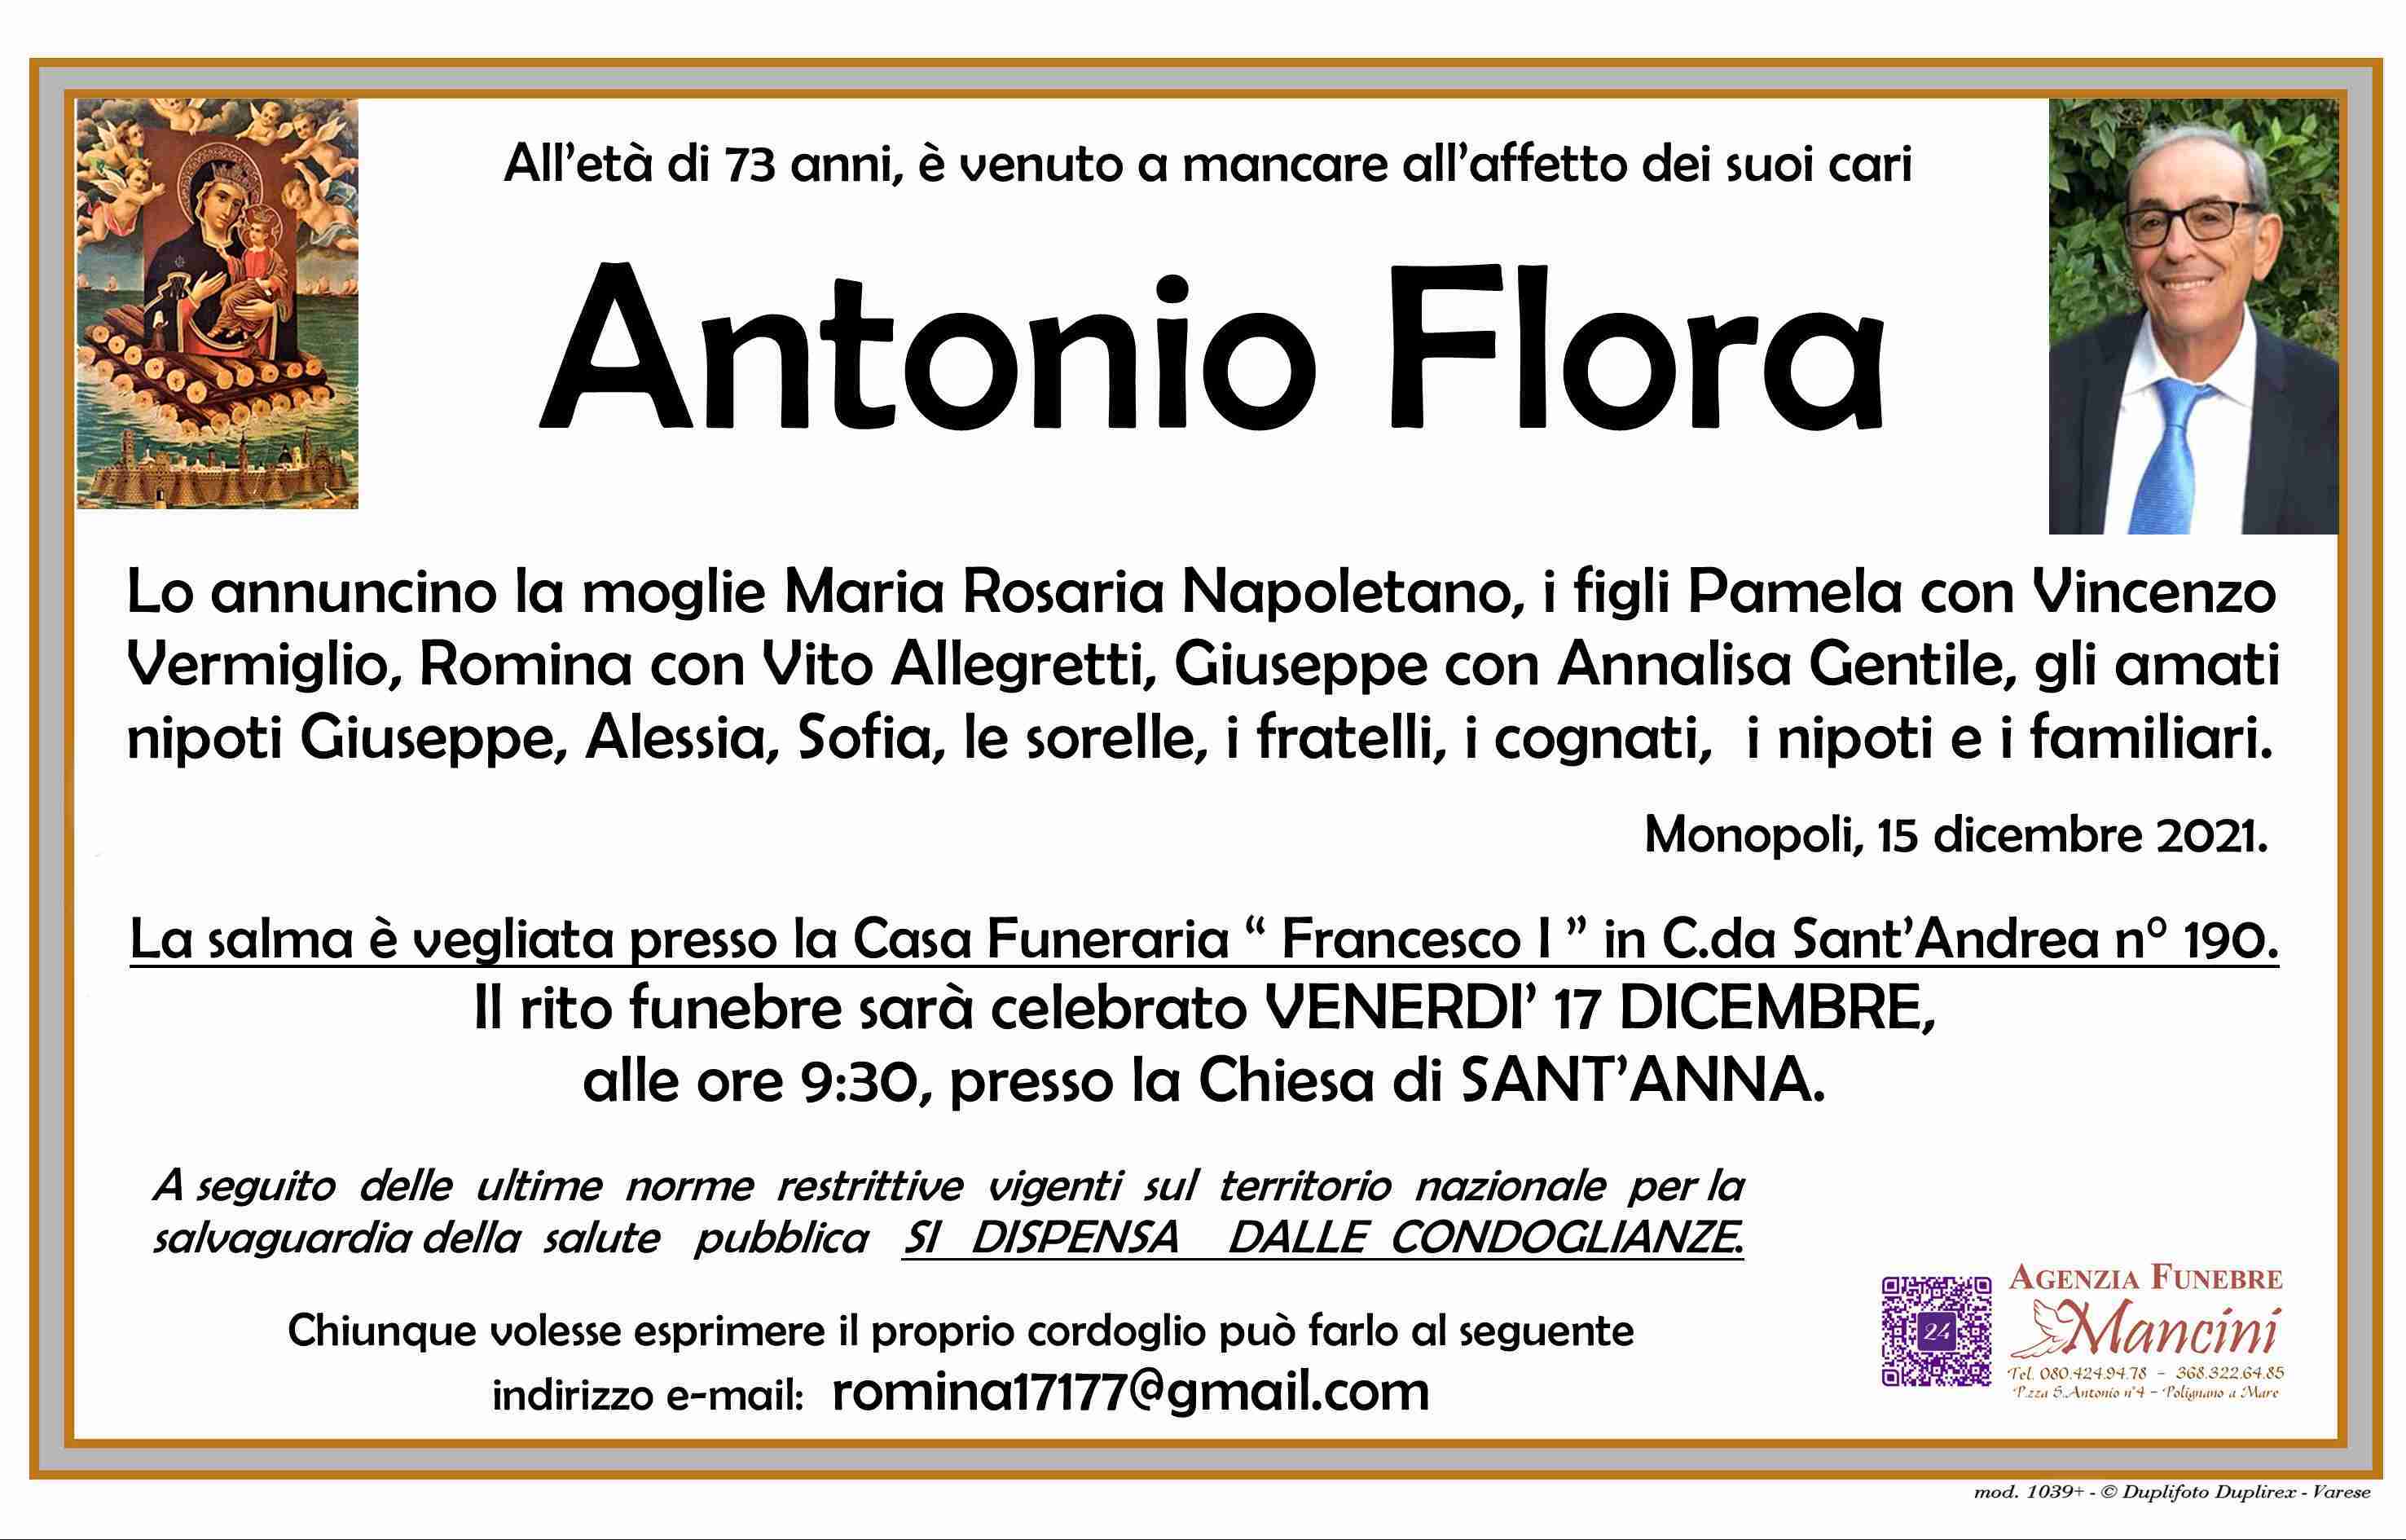 Antonio Flora